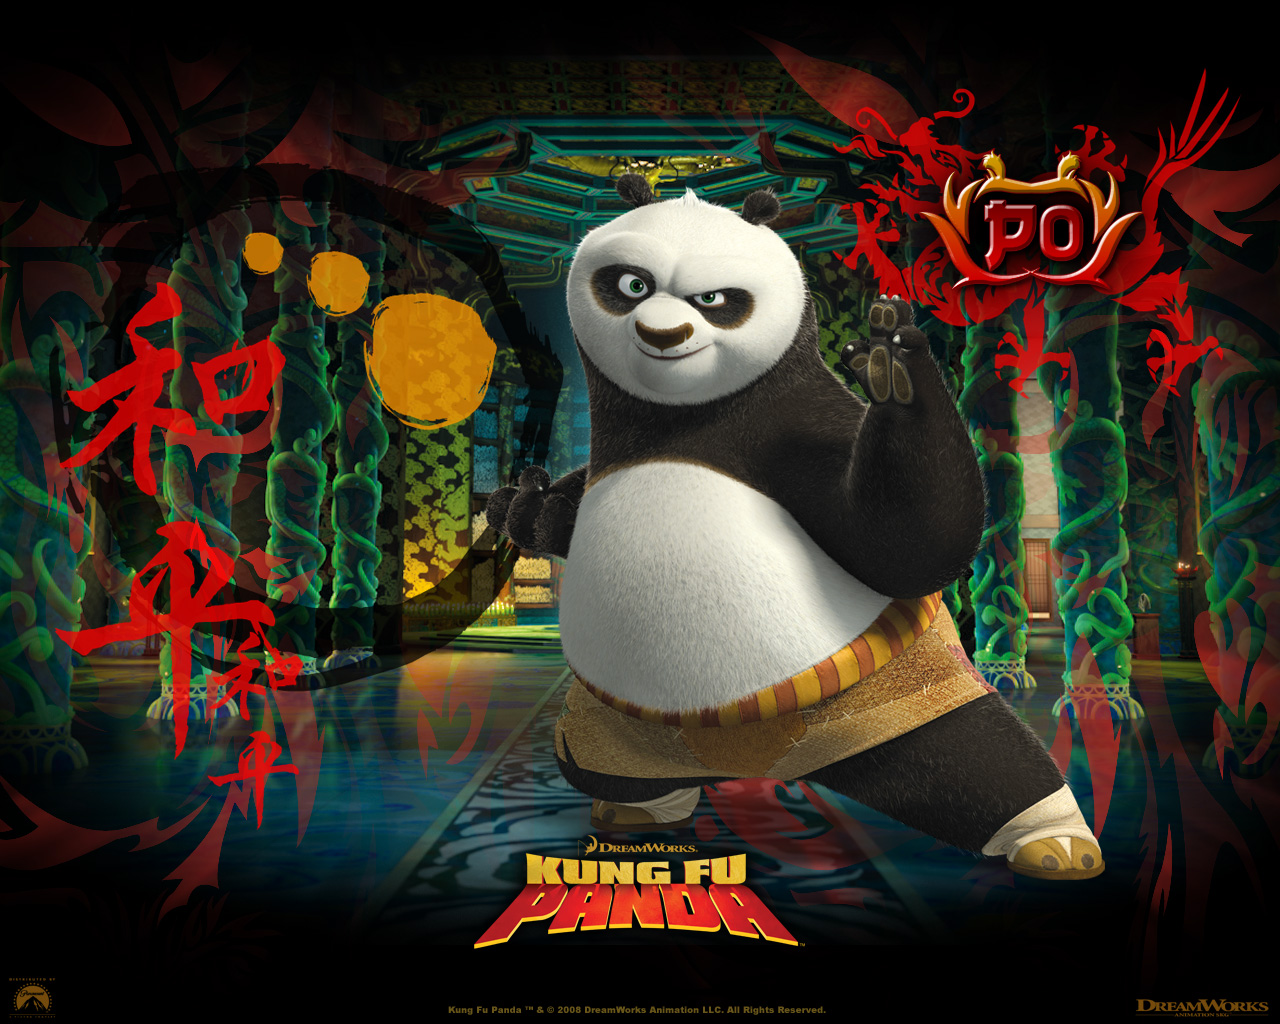 "Kung Fu Panda" desktop wallpaper (1280 x 1024 pixels)